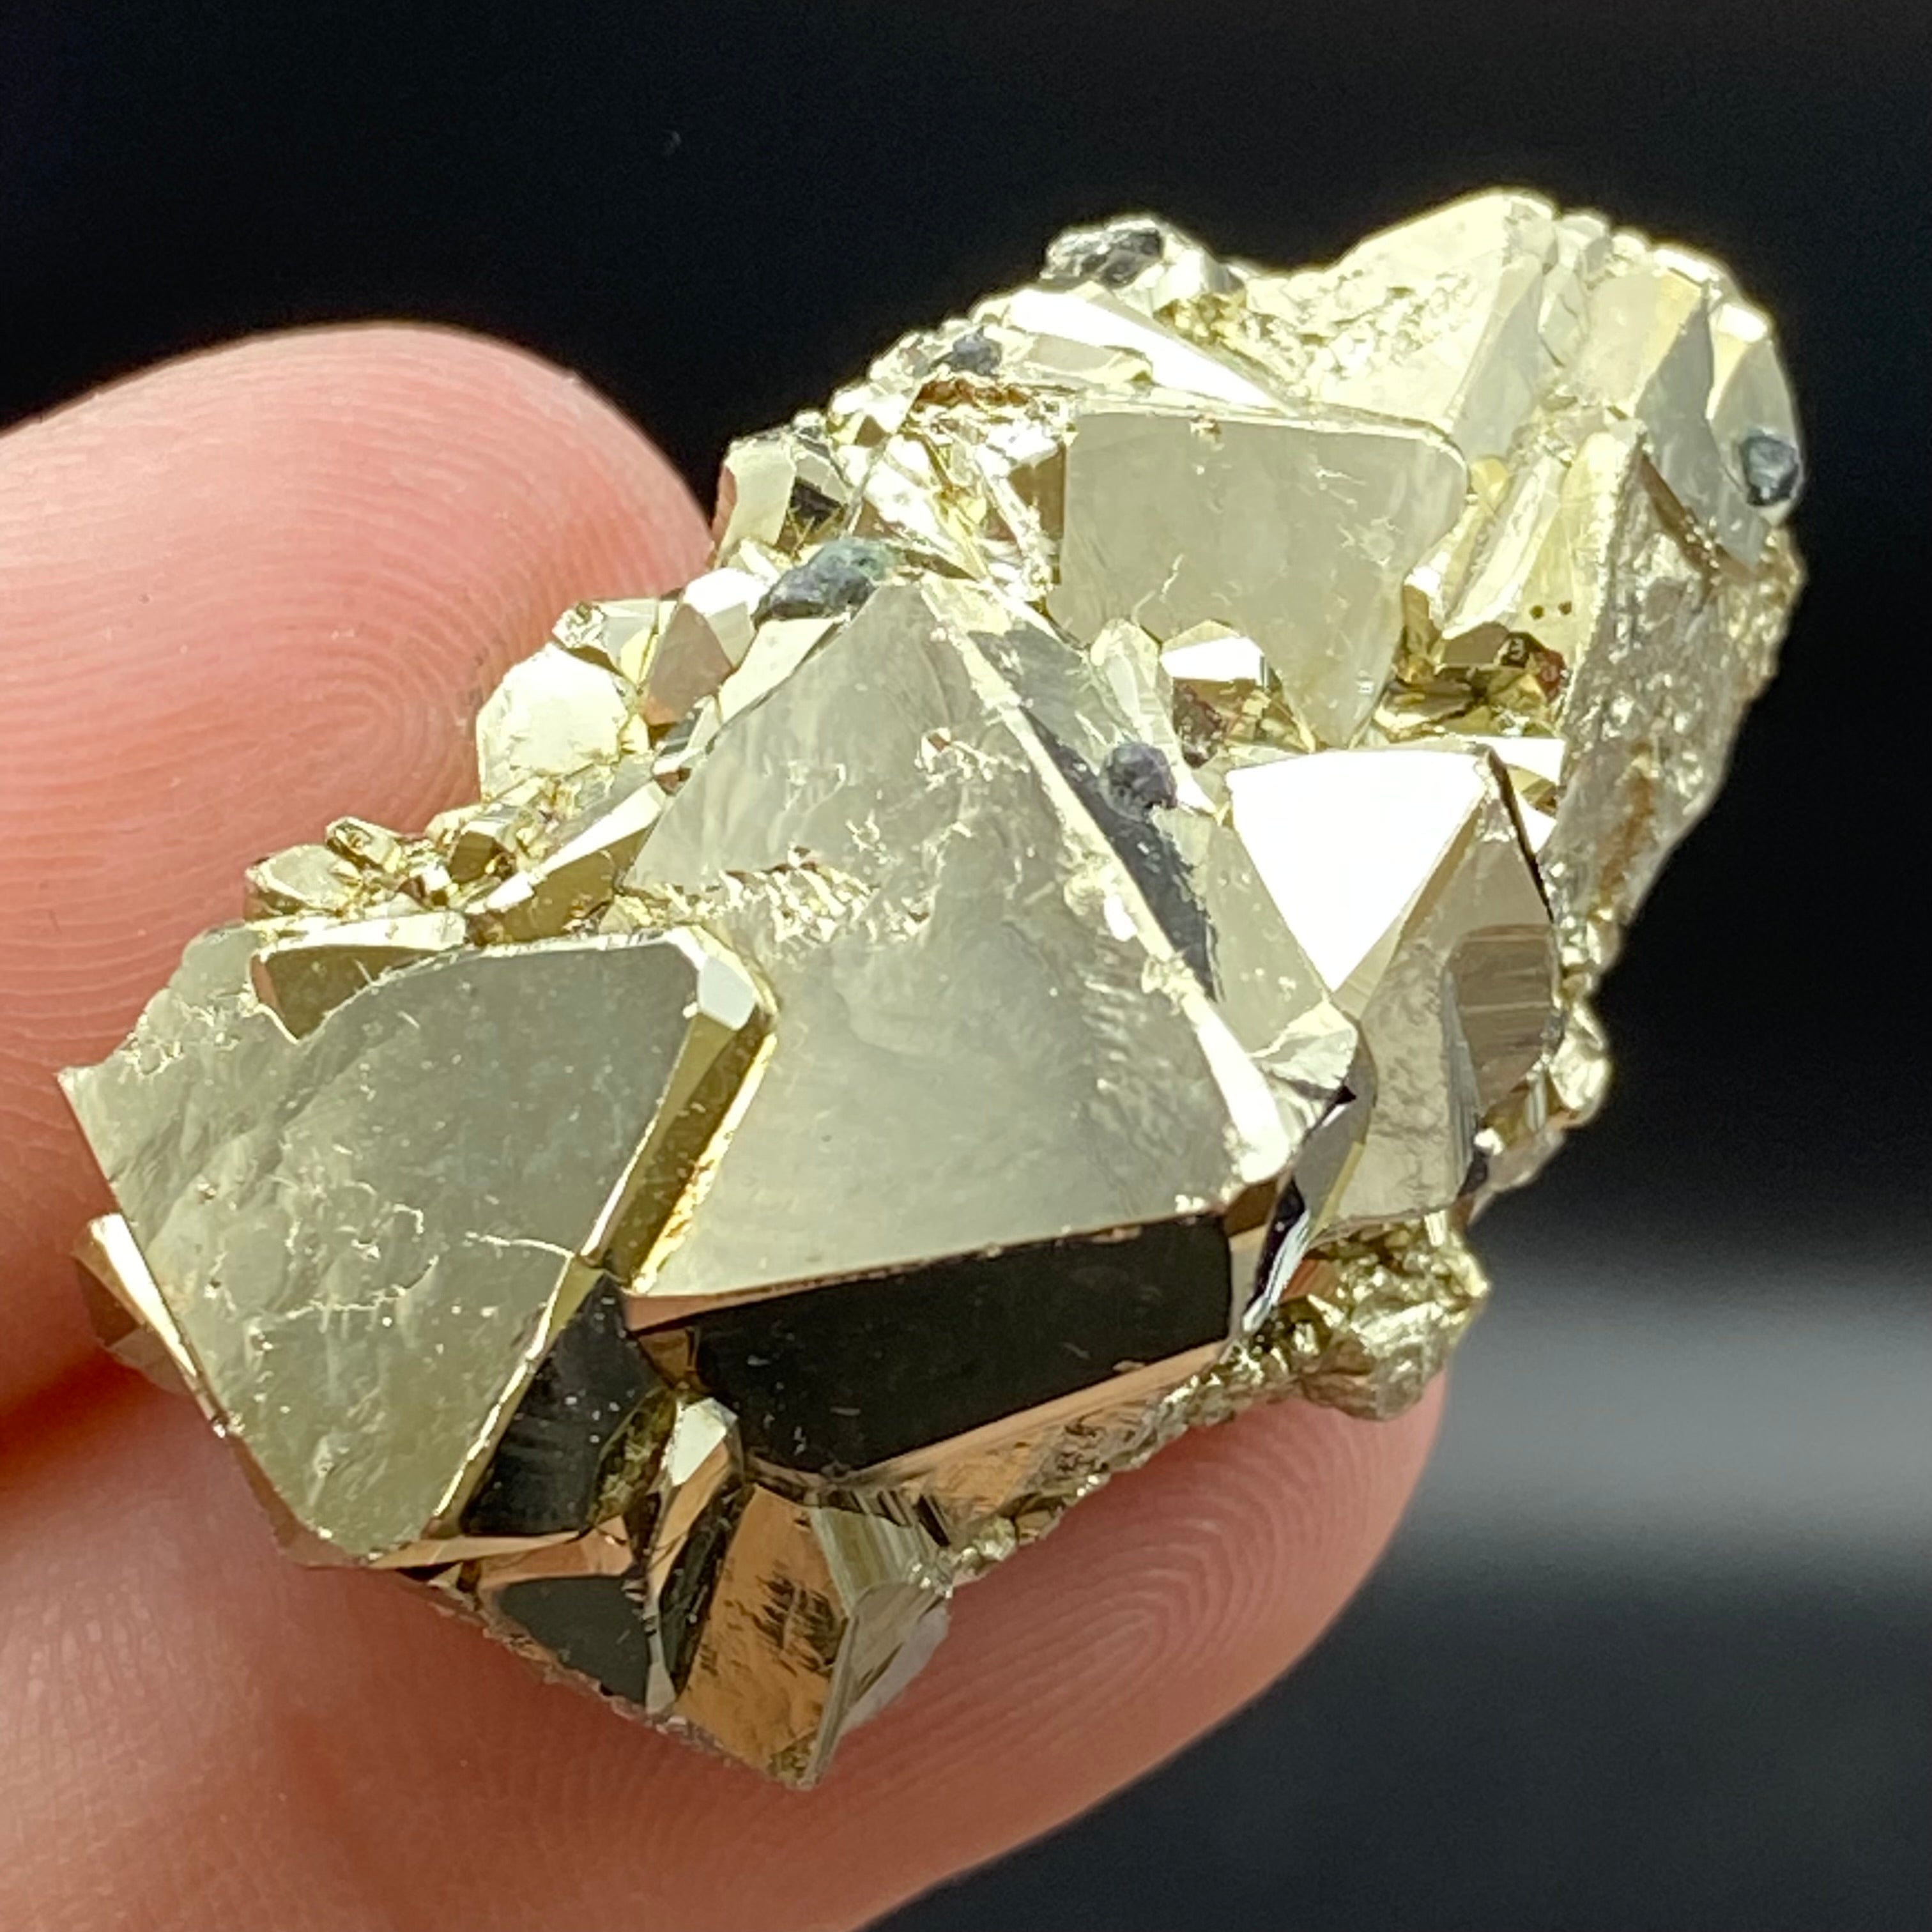 Peruvian Pyrite Crystal - 163